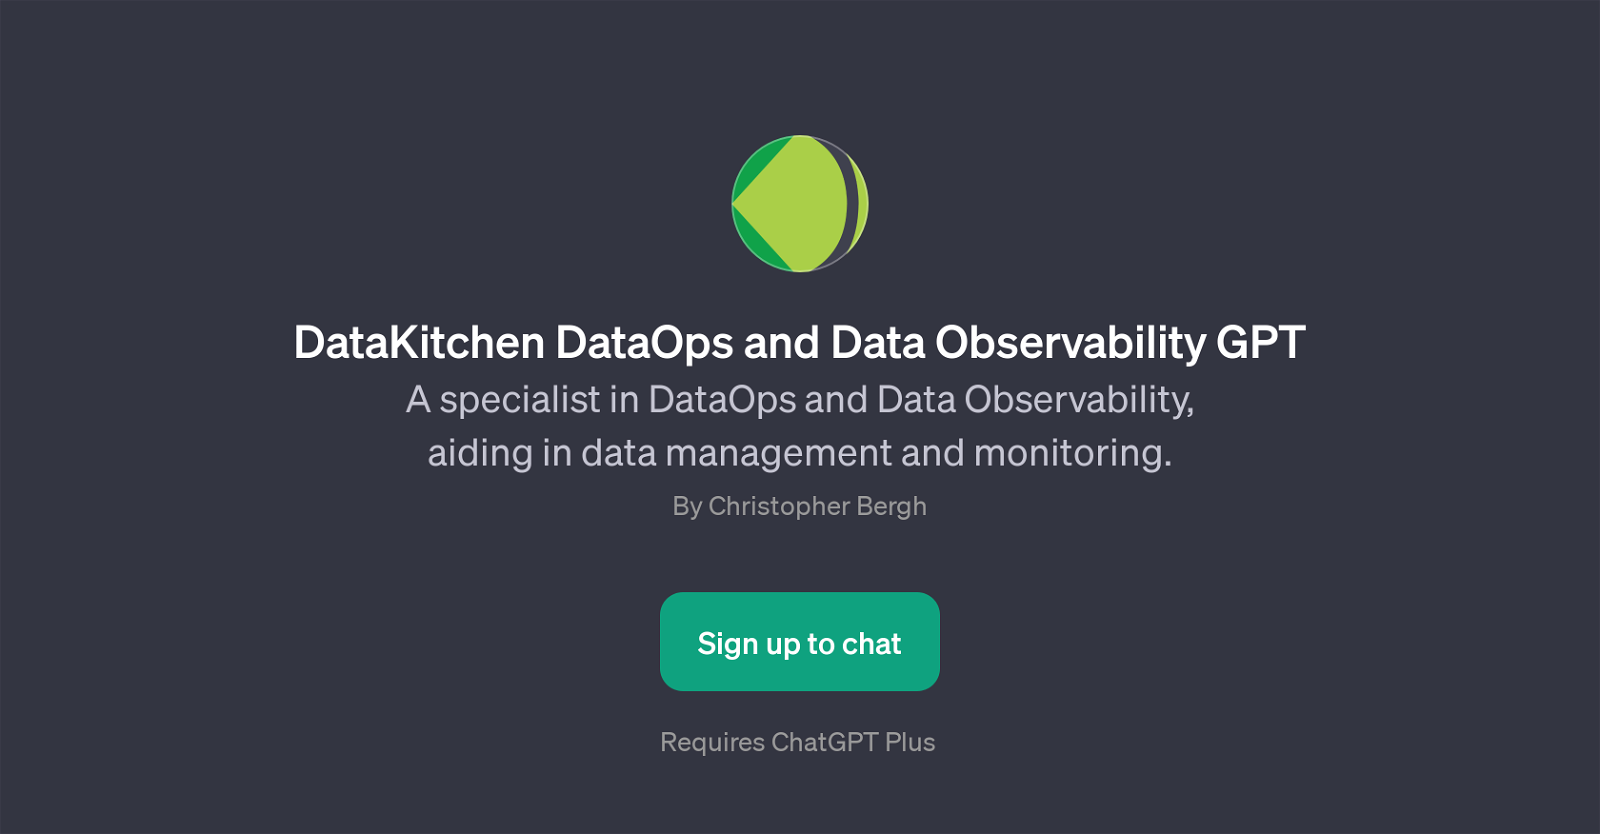 DataKitchen DataOps and Data Observability GPT website